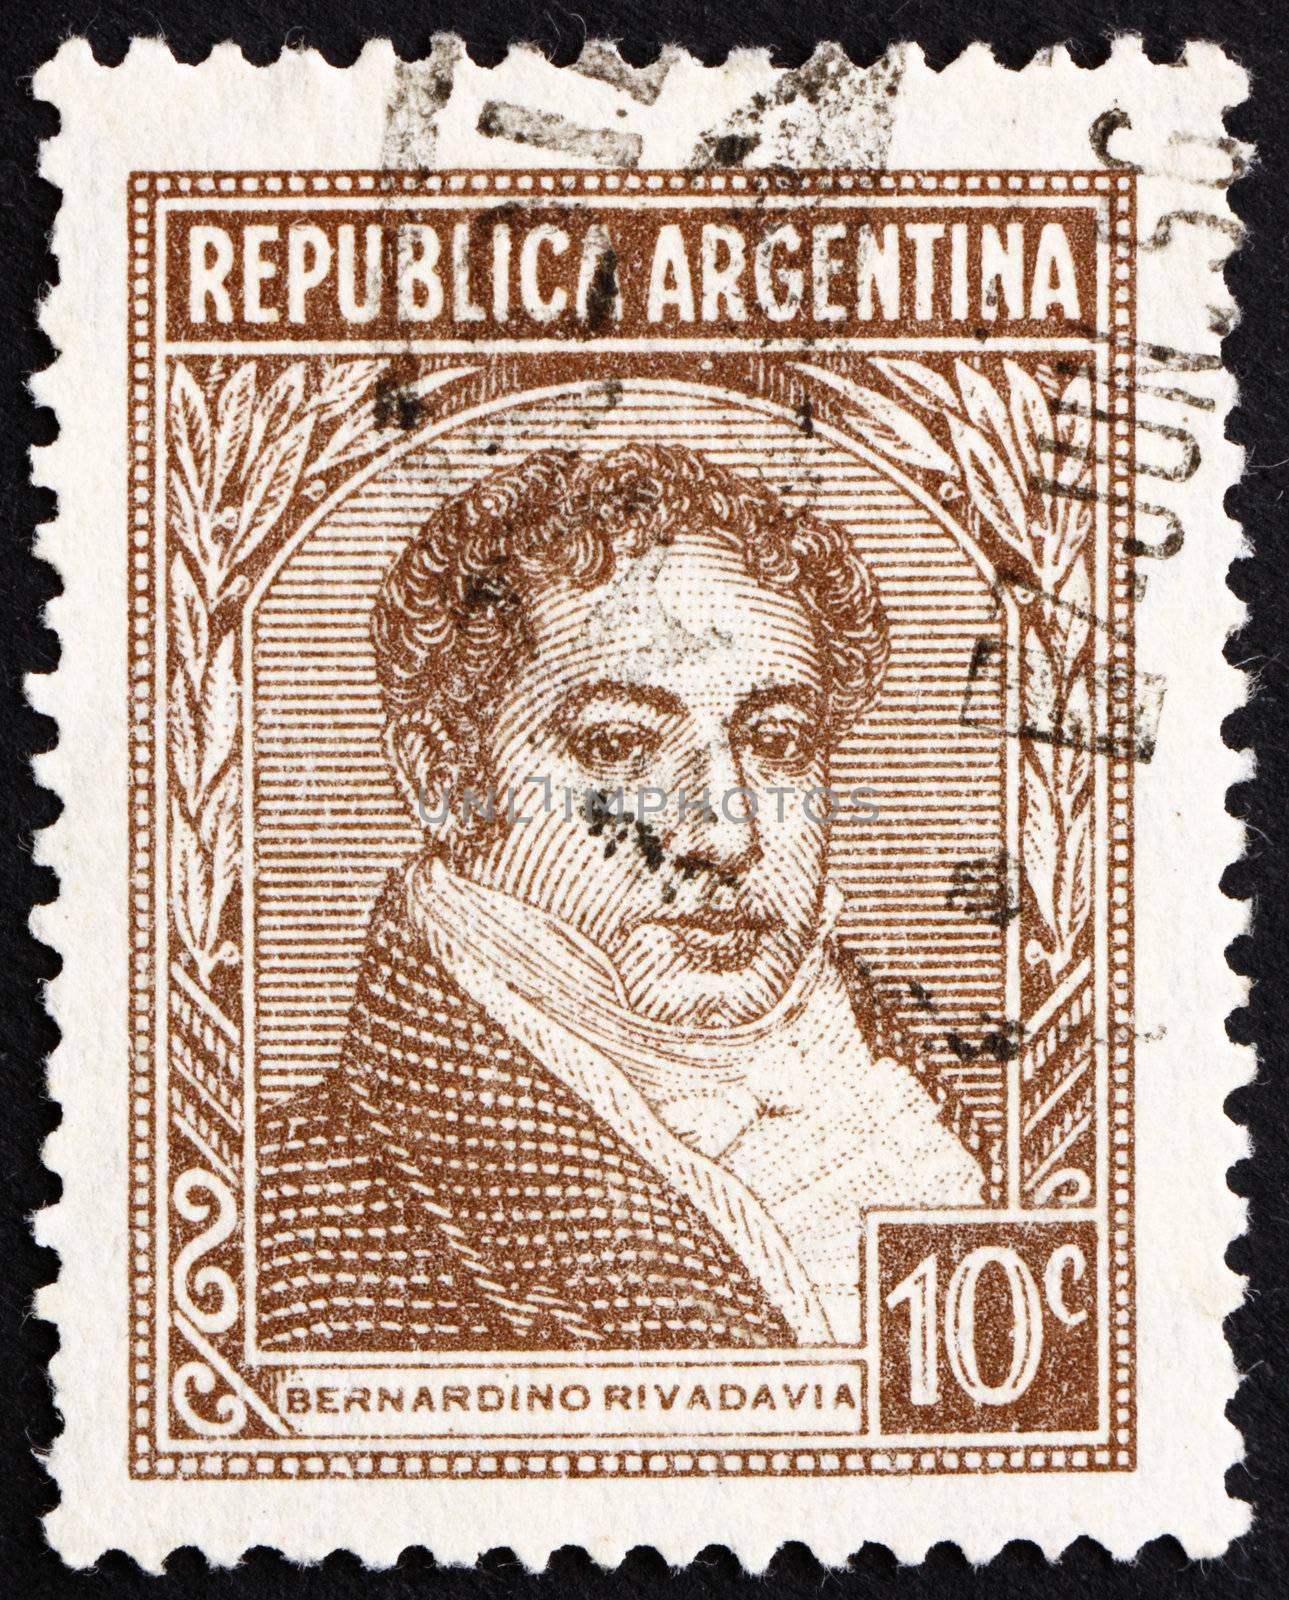 ARGENTINA - CIRCA 1942: a stamp printed in the Argentina shows Bernardino Rivadavia, The First President of Argentina, 1826 - 1827, circa 1942